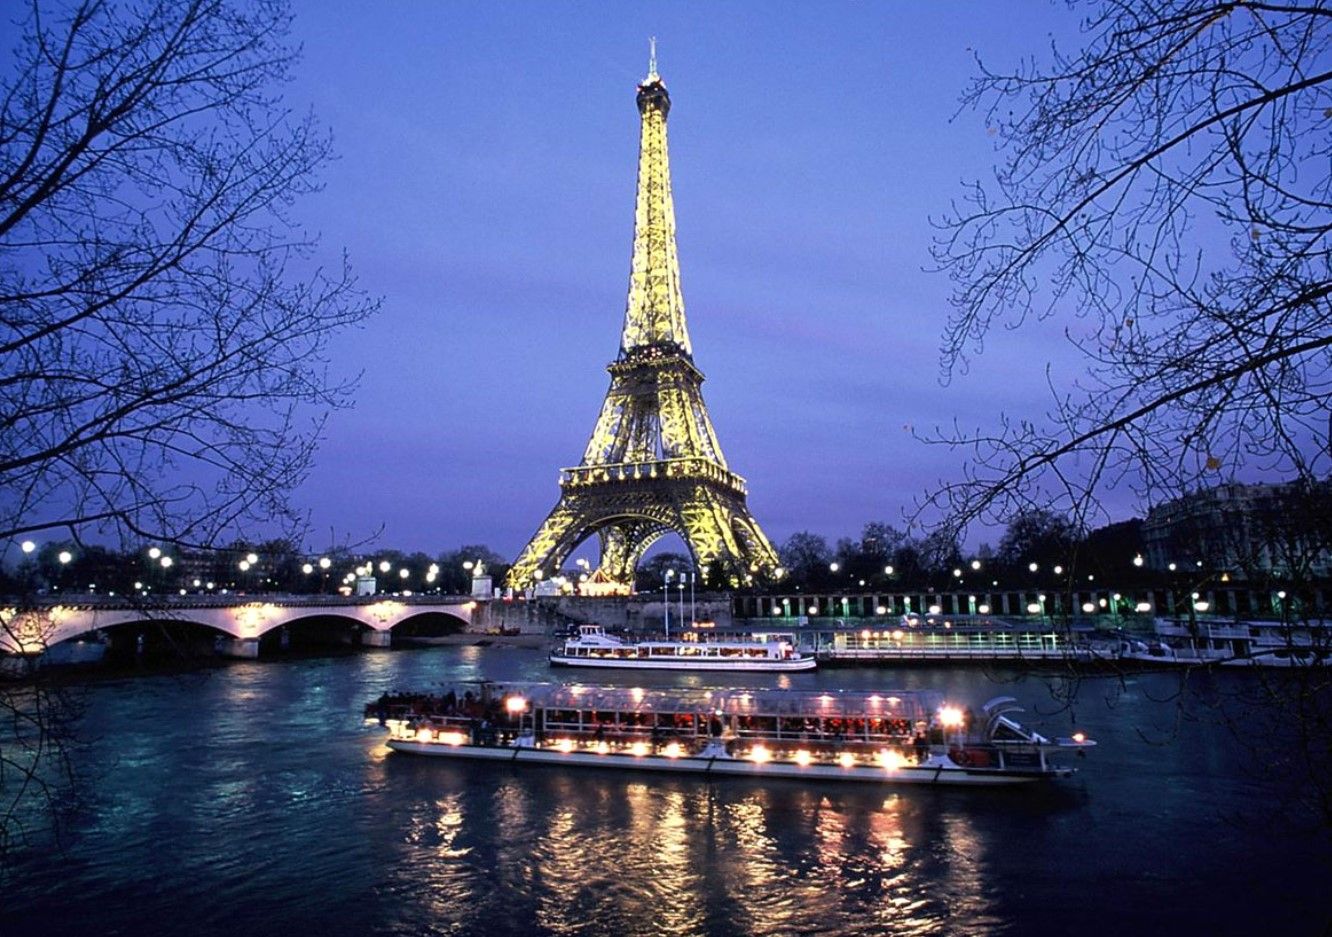 Paris Seine cruise - Things To Do at Aquatics Centre Paris Olympics 2024 | Top Attractions, Night Life, Restaurants